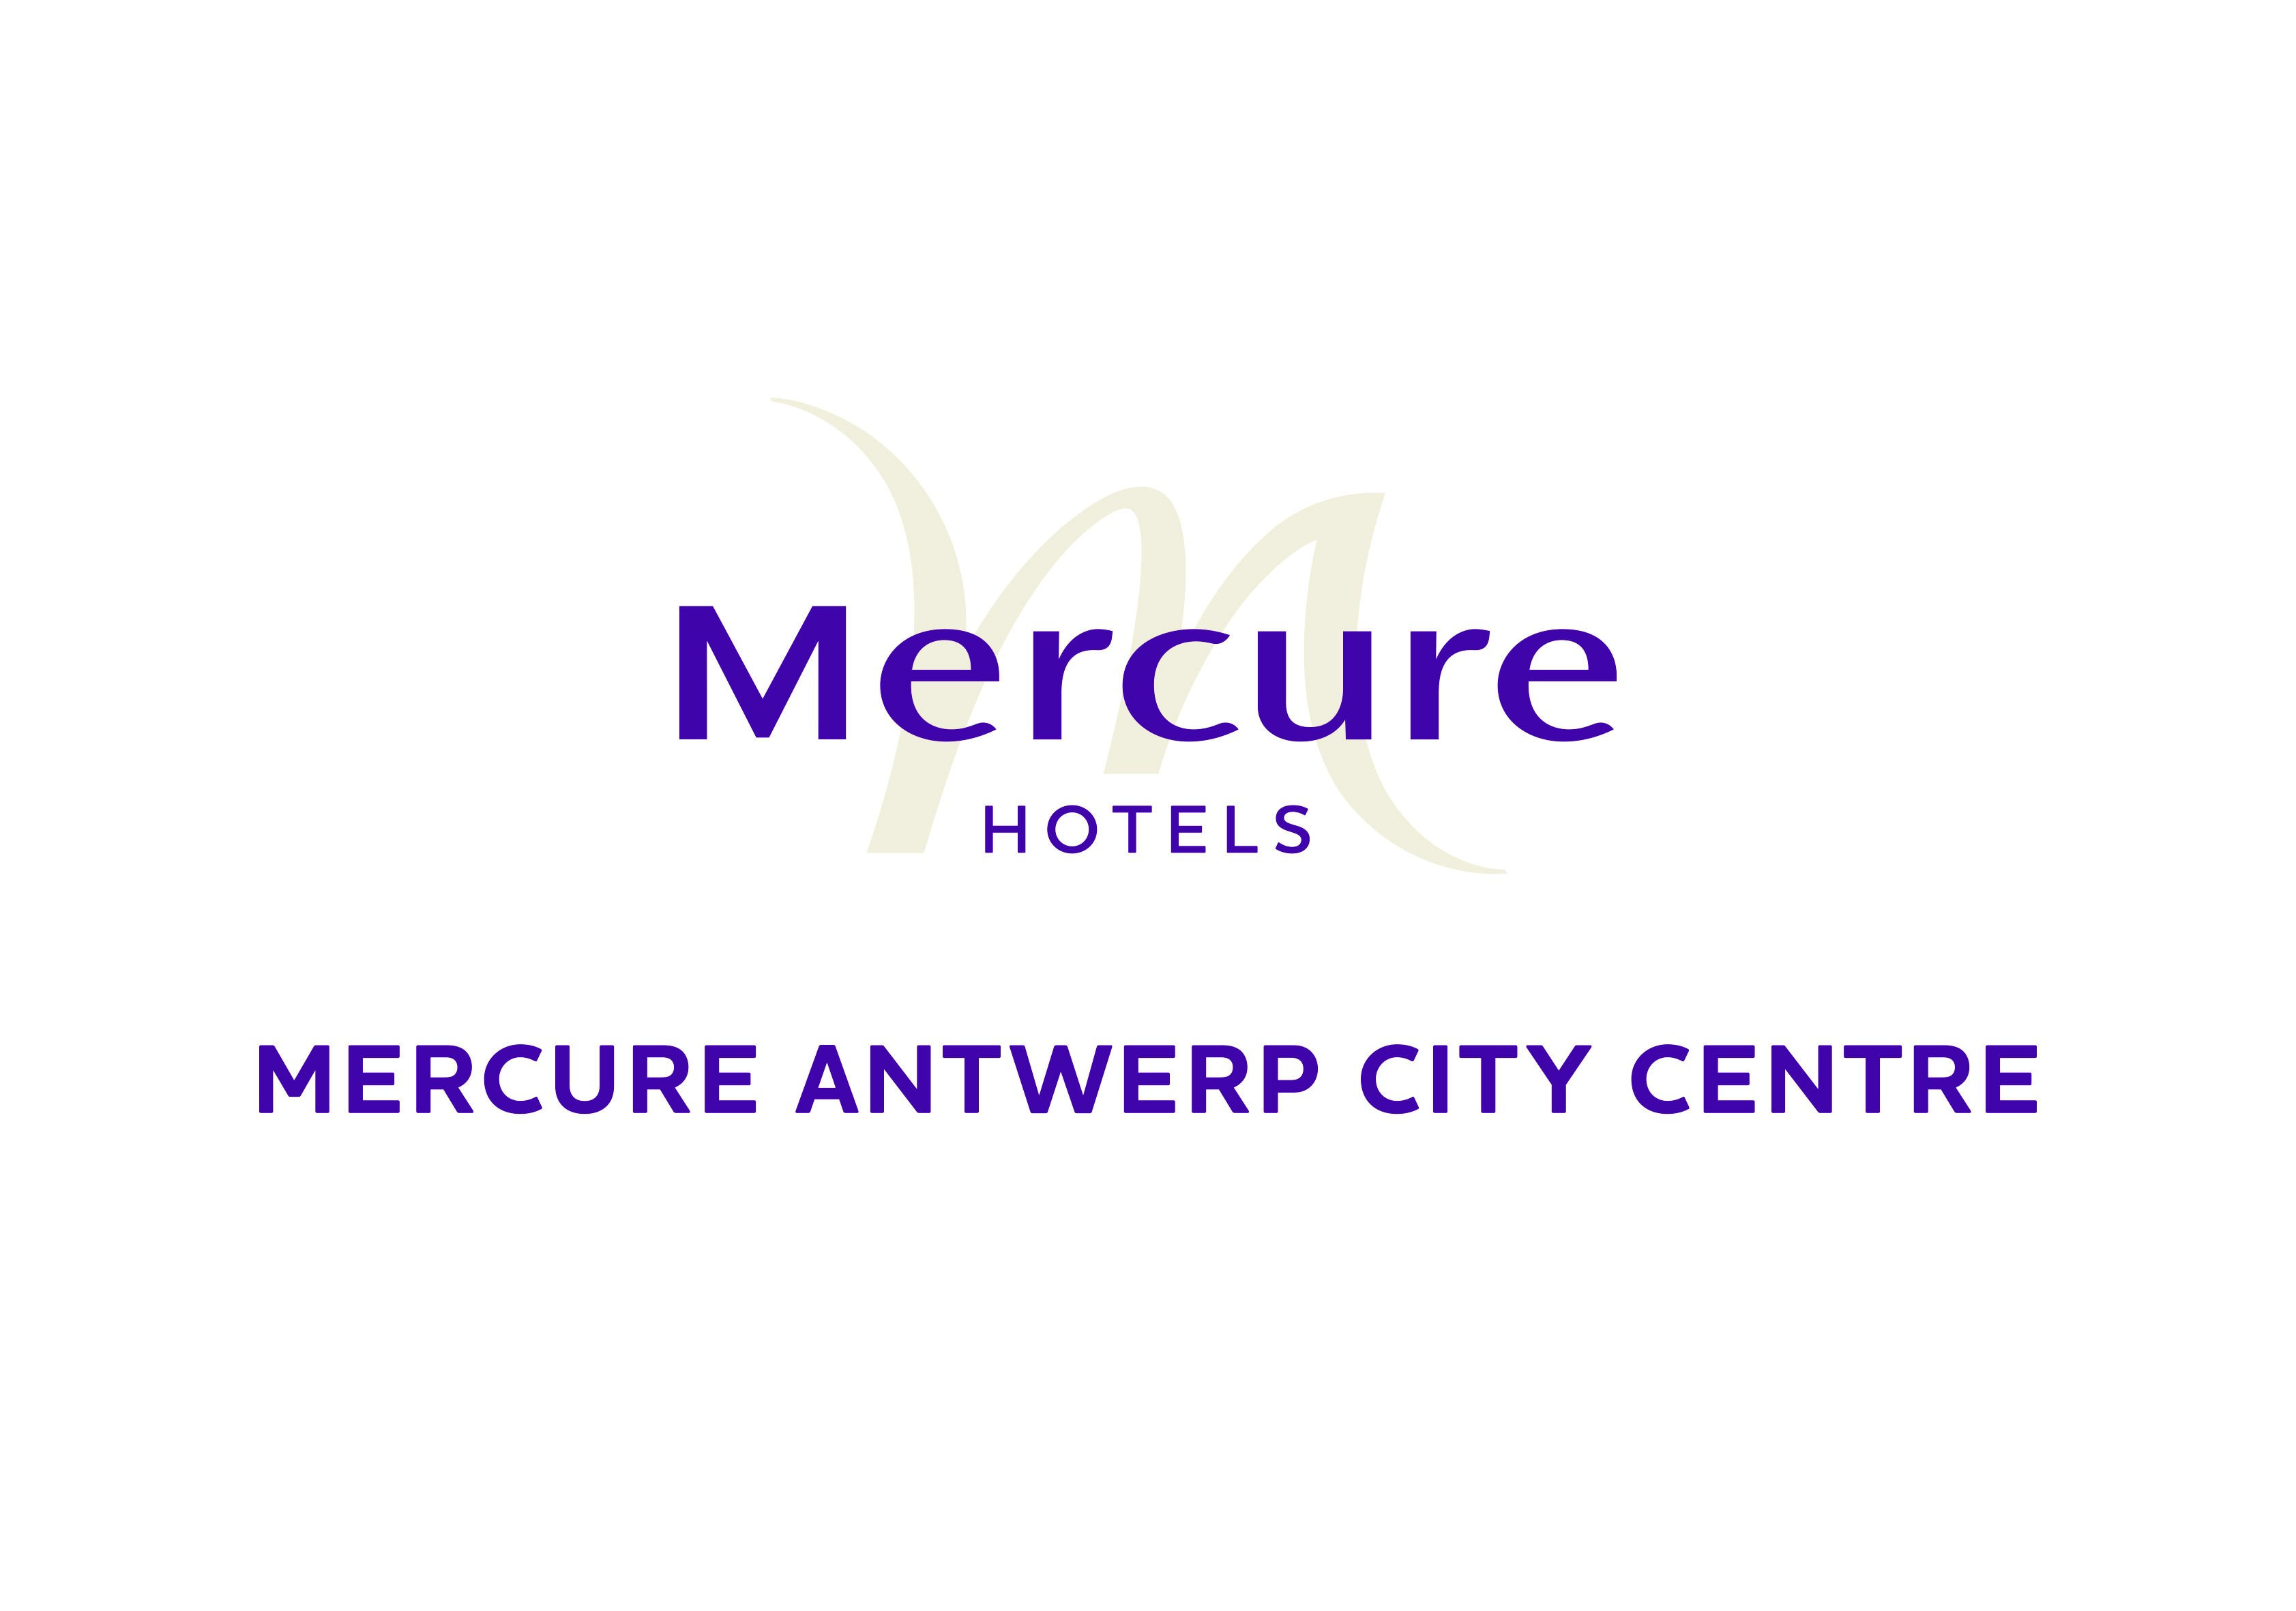 Mercure Antwerp City Centre